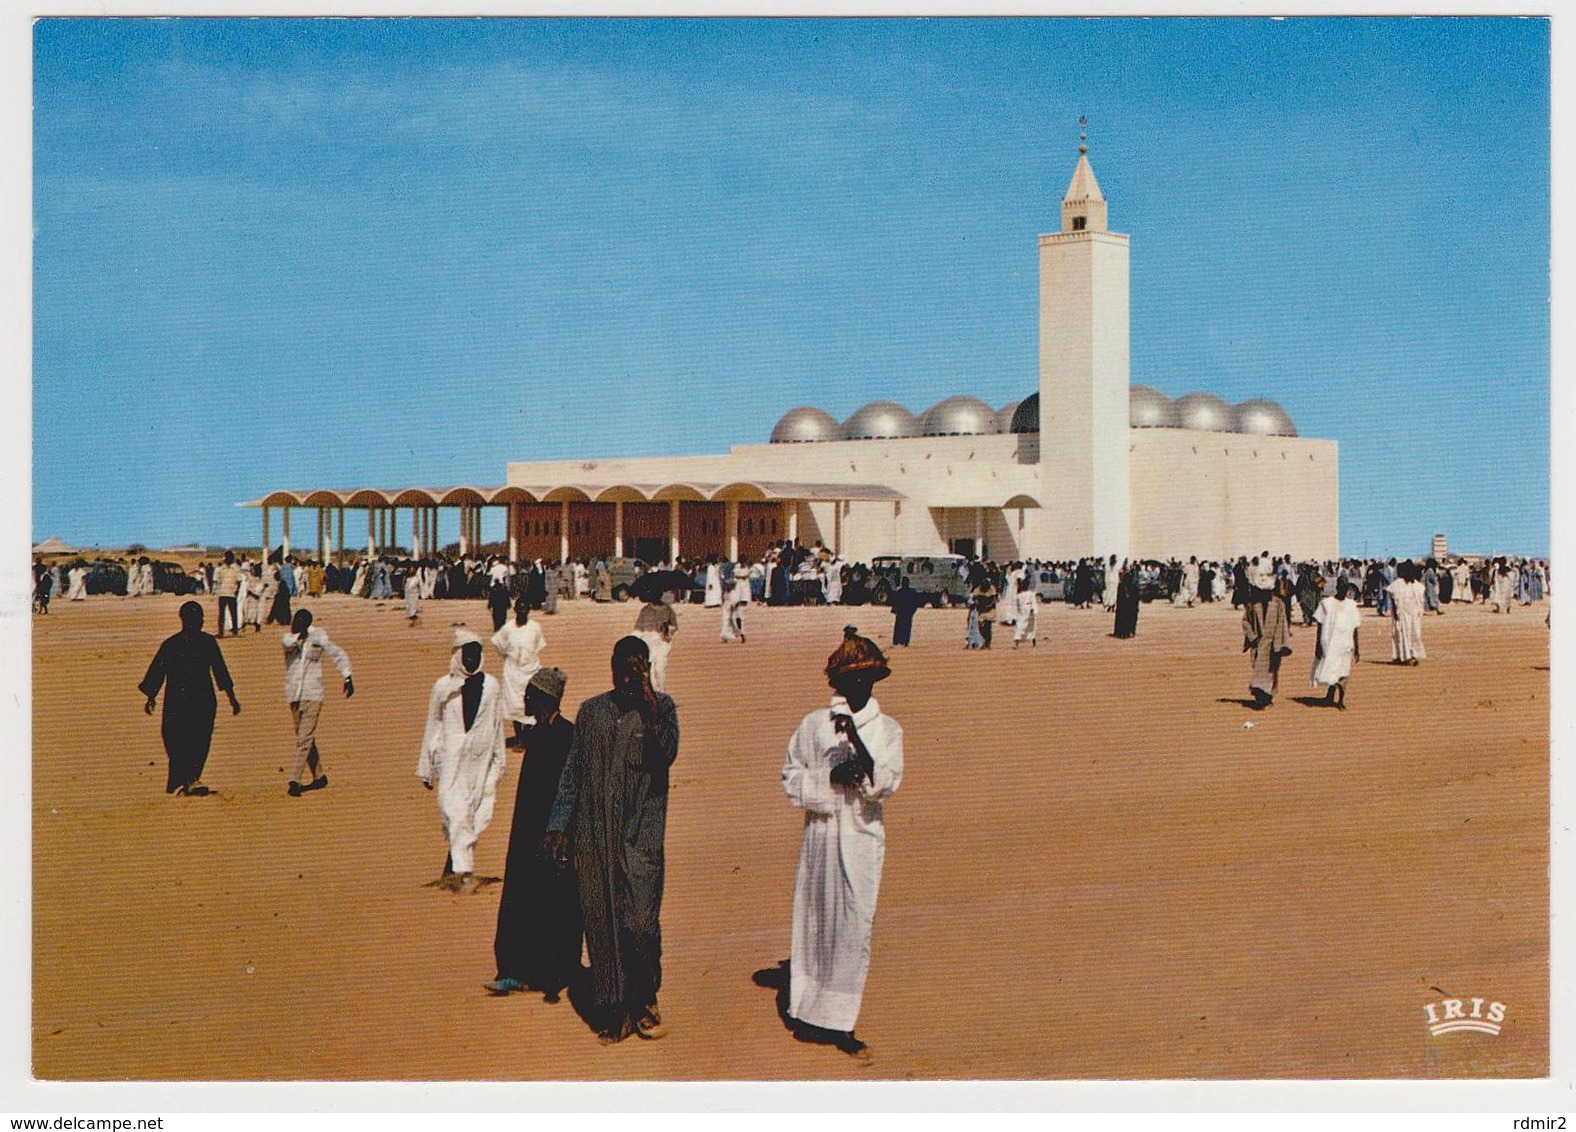 1786/ NOUAKCHOTT, Mauritanie. Mosquée / Mosque. - Non écrite. Unused. No Escrita. Non Scritta. Ungelaufen. - Mauretanien